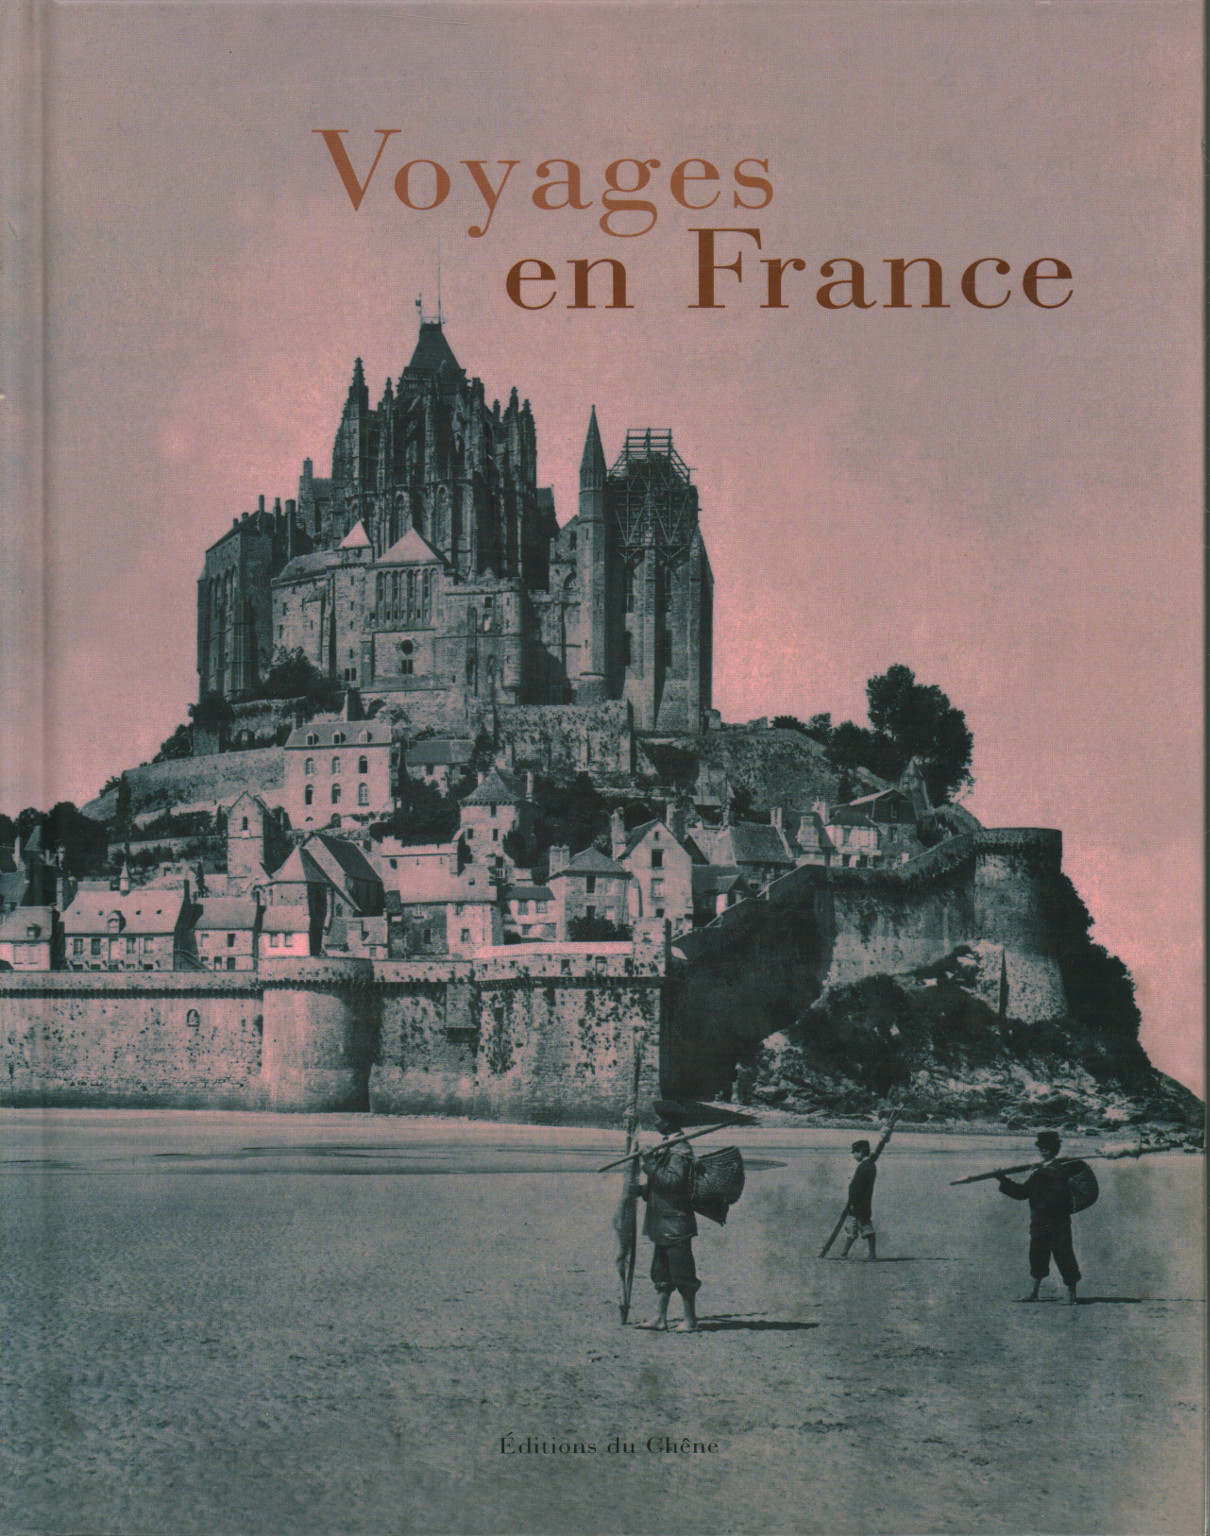 Voyages en France, s.a.